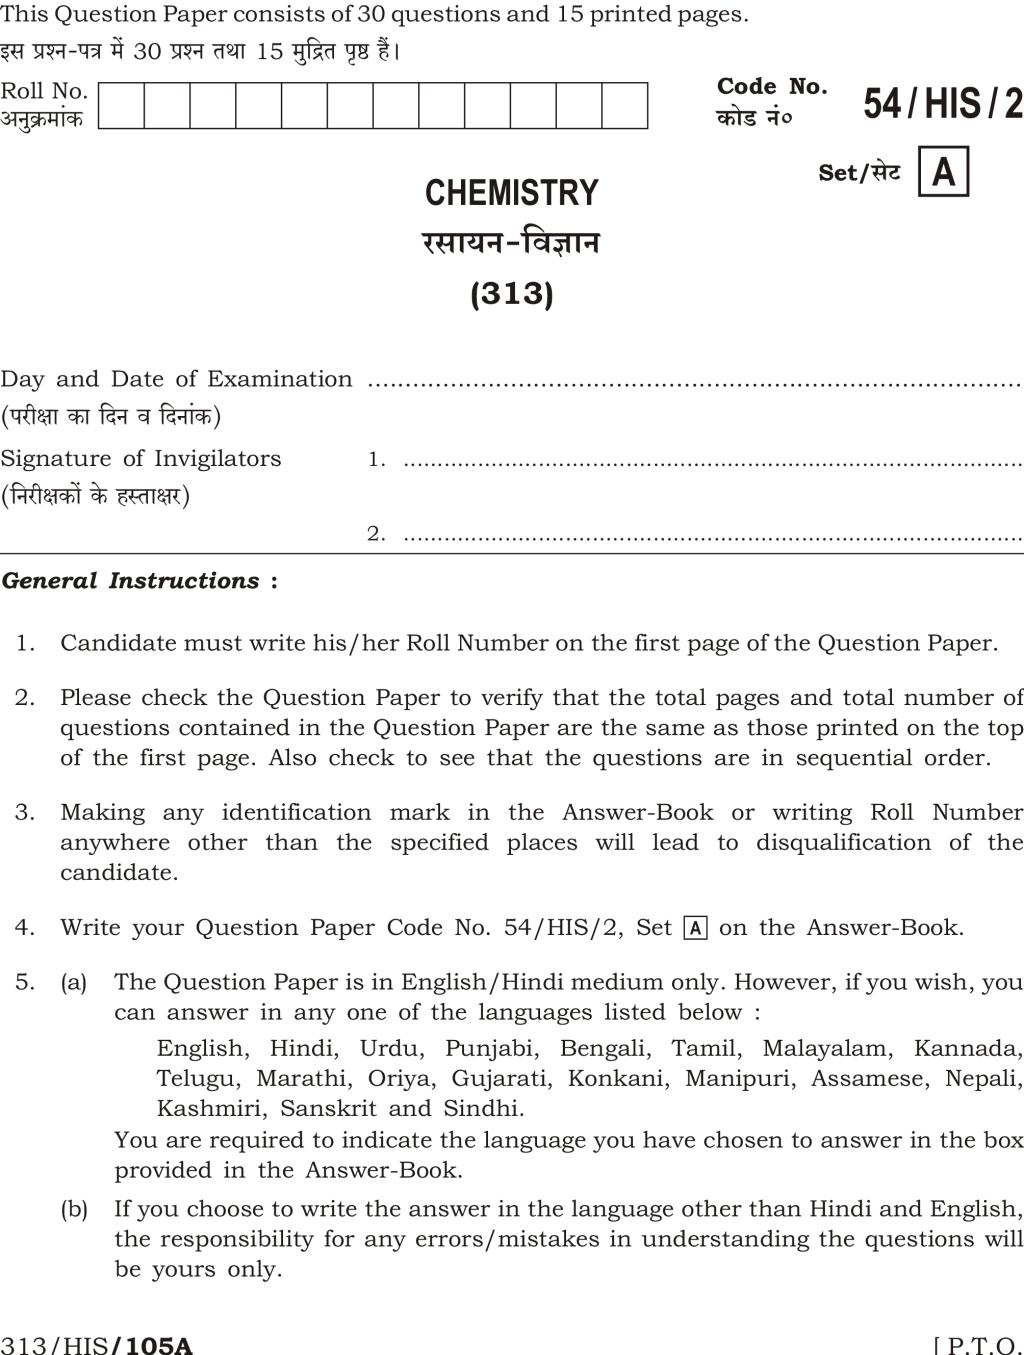 NIOS Class 12 Question Paper Apr 2017 - Chemistry - Page 1